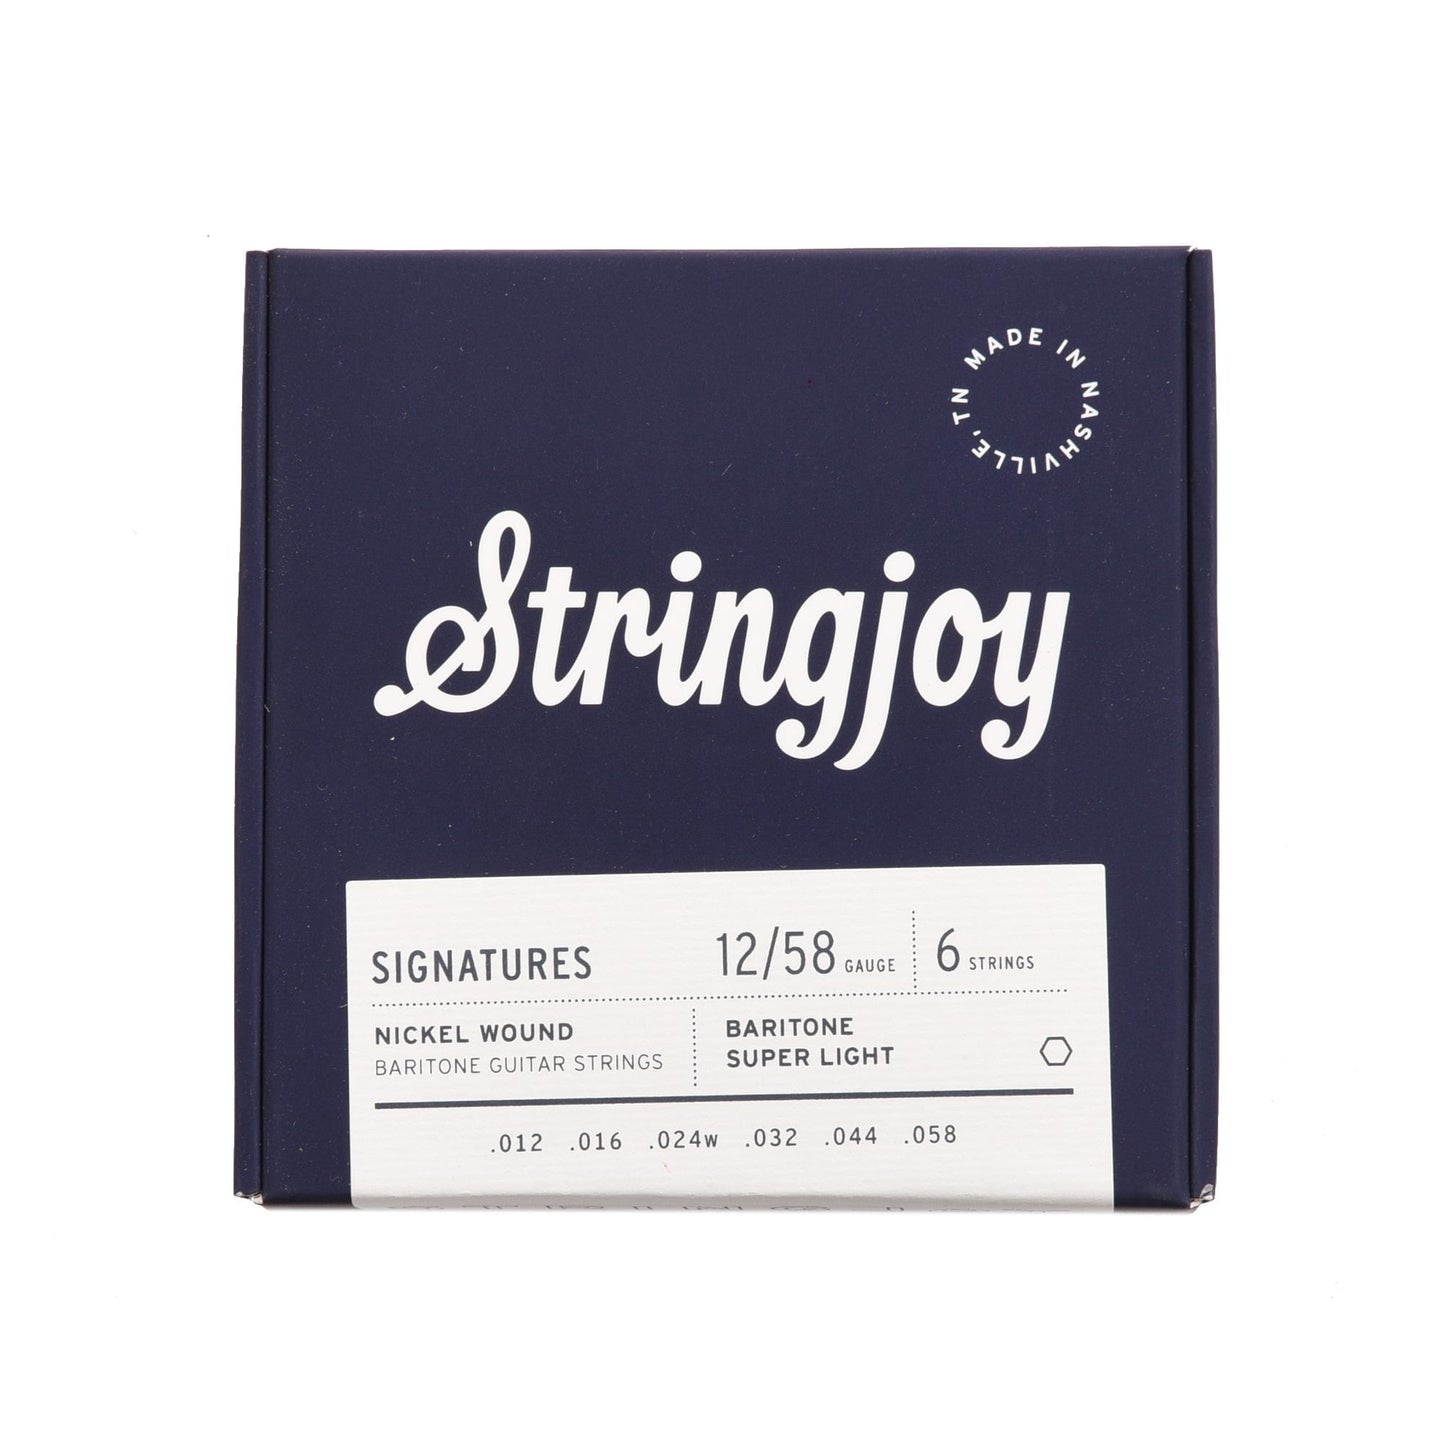 Stringjoy Signatures Baritone Balanced Super Light Gauge 12-58 Nickel Wound Electric Guitar Strings Accessories / Strings / Guitar Strings